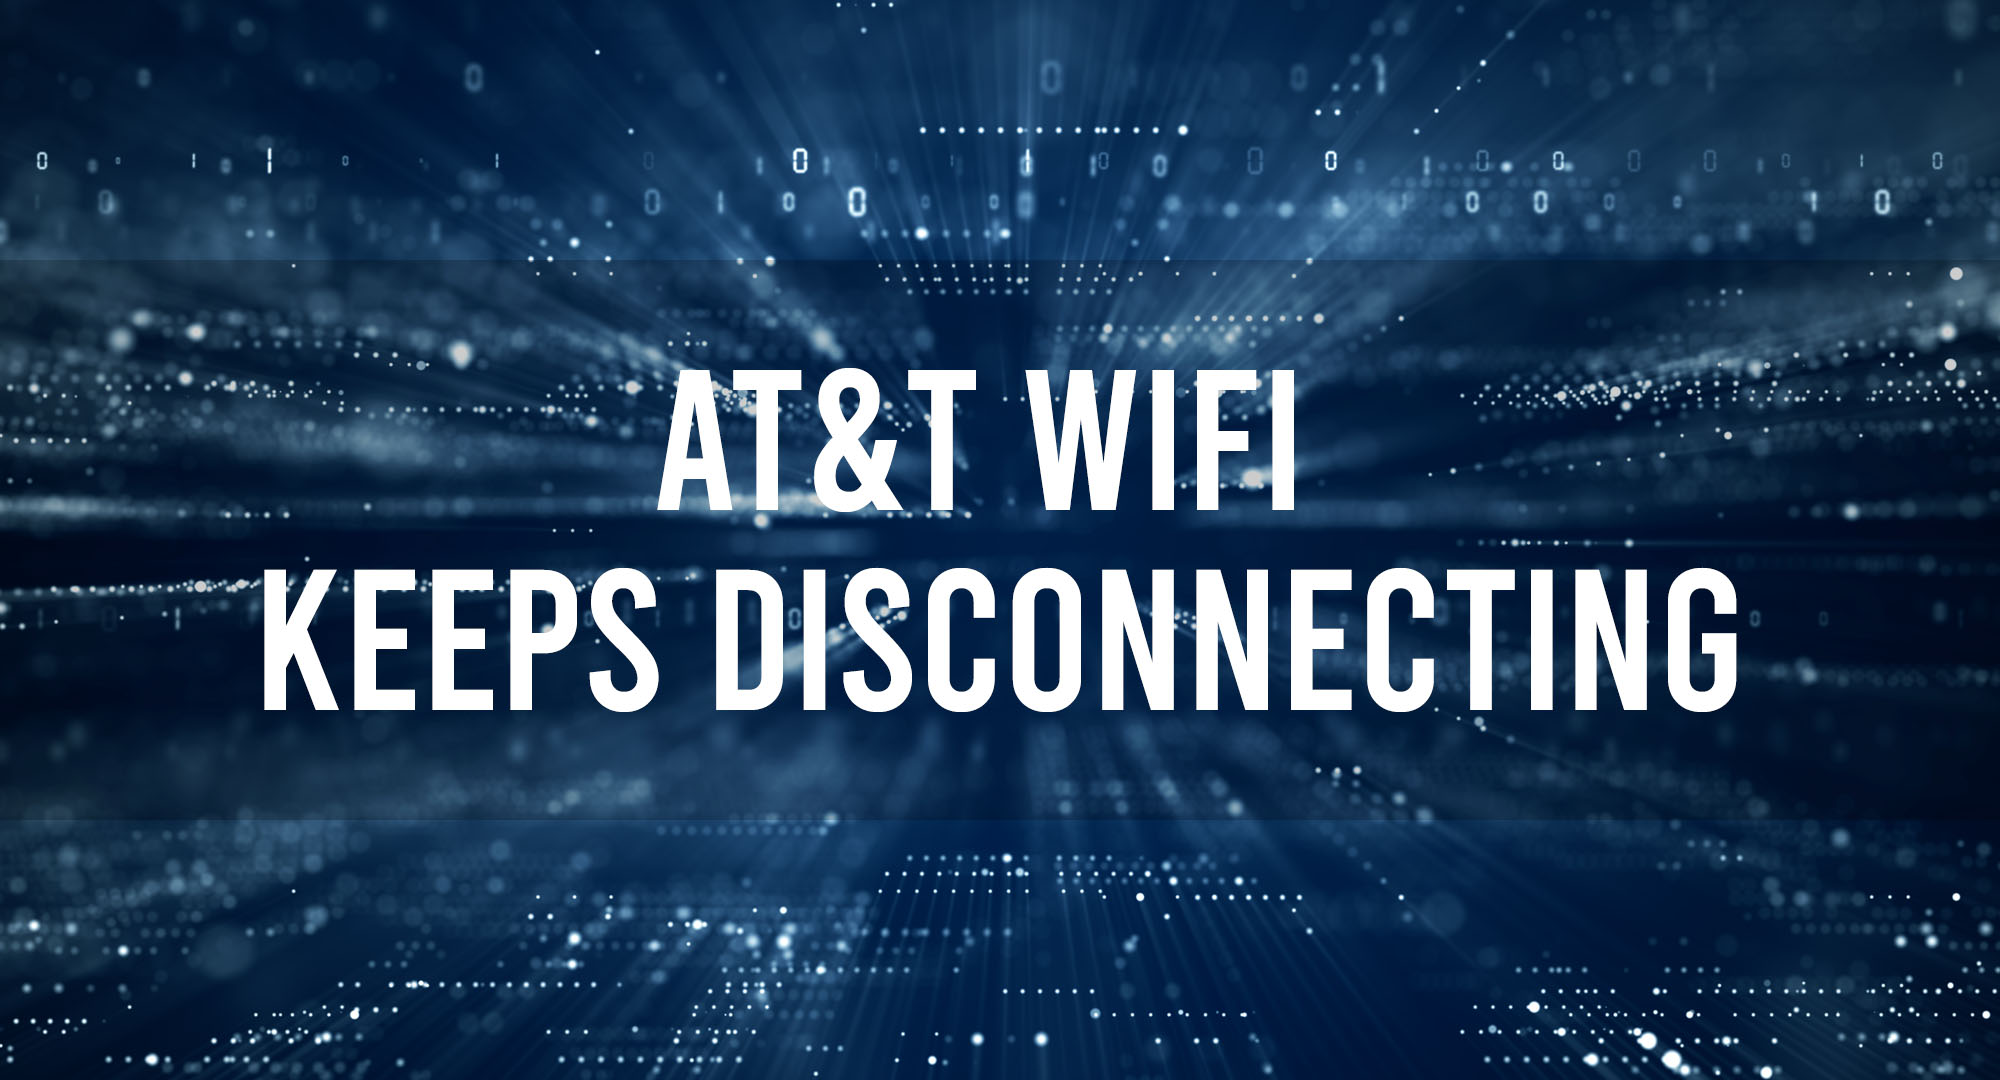 ATT WIFI Keeps Diconnecting